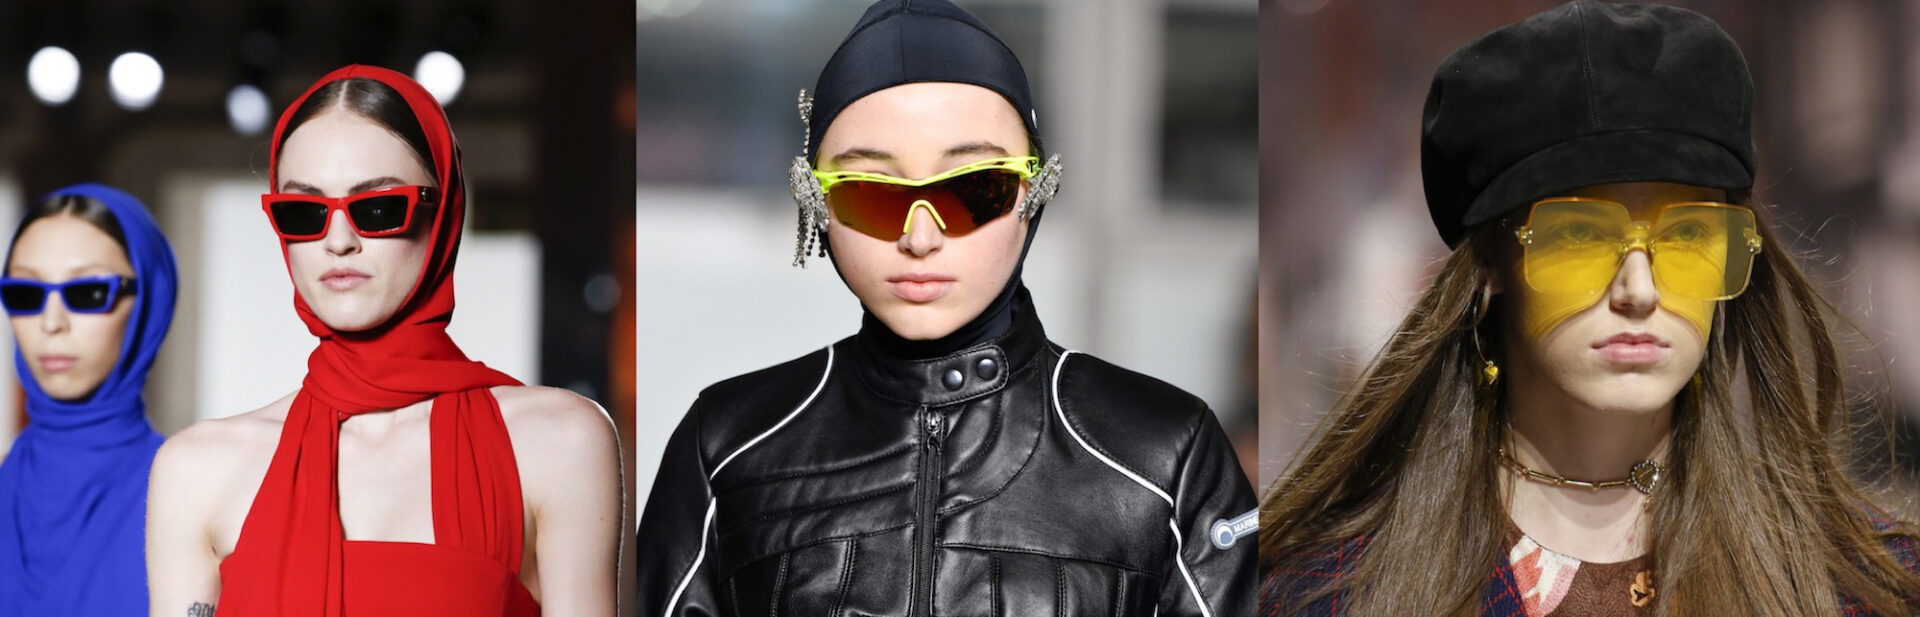 Eyewear Sunglasses Eyeglasses Trends Spotted at Paris Fashion Week Fall 2018 Runway Trend Spotting Runway Fashion